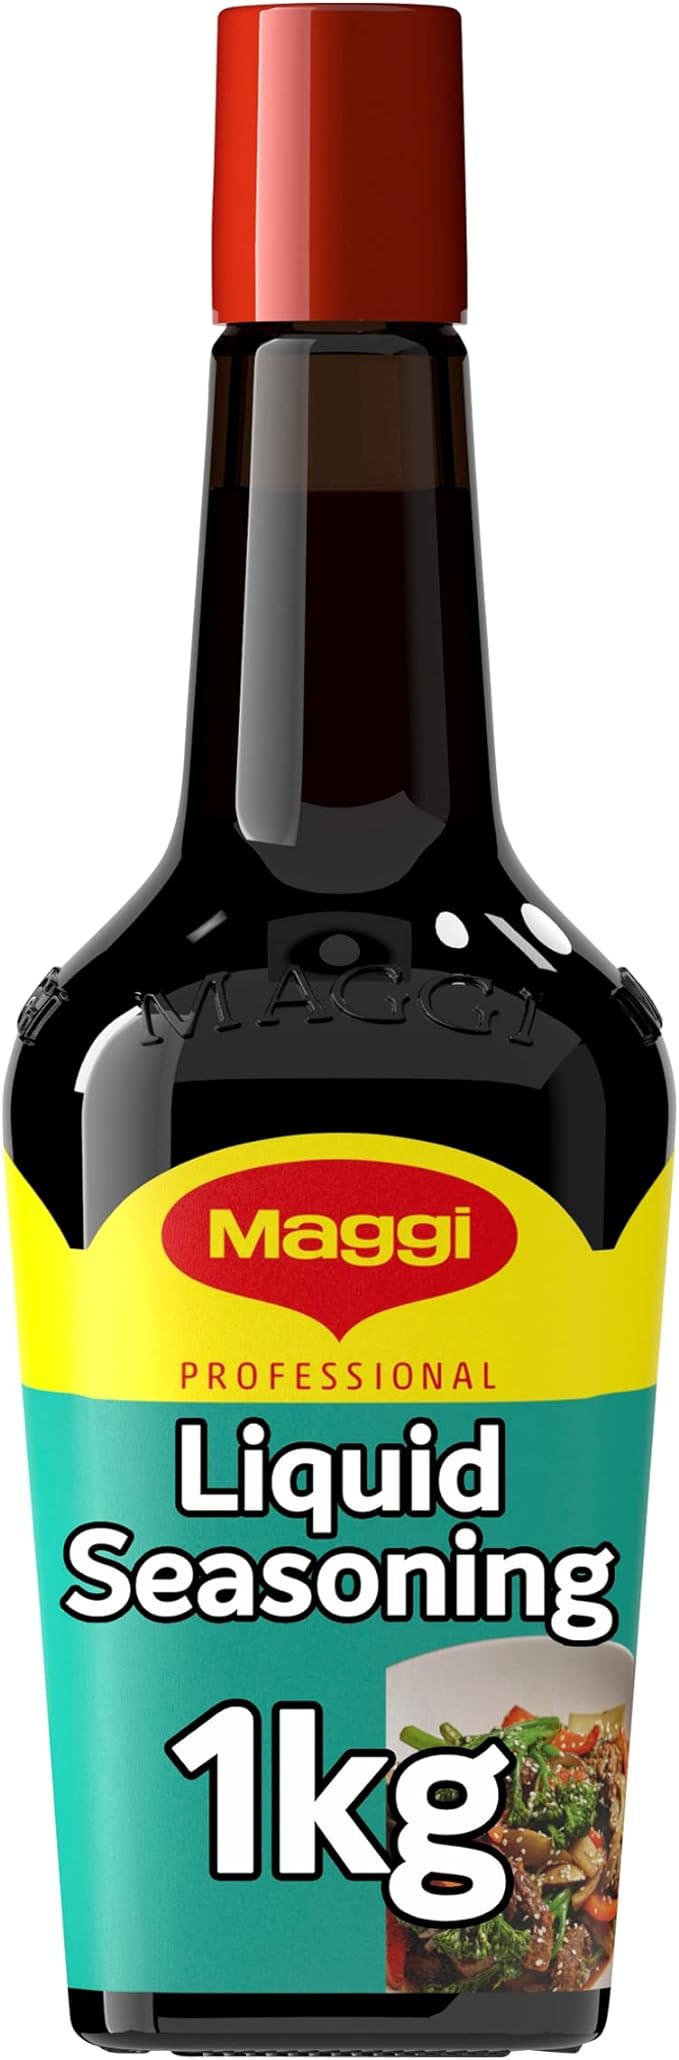 MAGGI Liquid Seasoning Bottle Pack of -6x1 KG